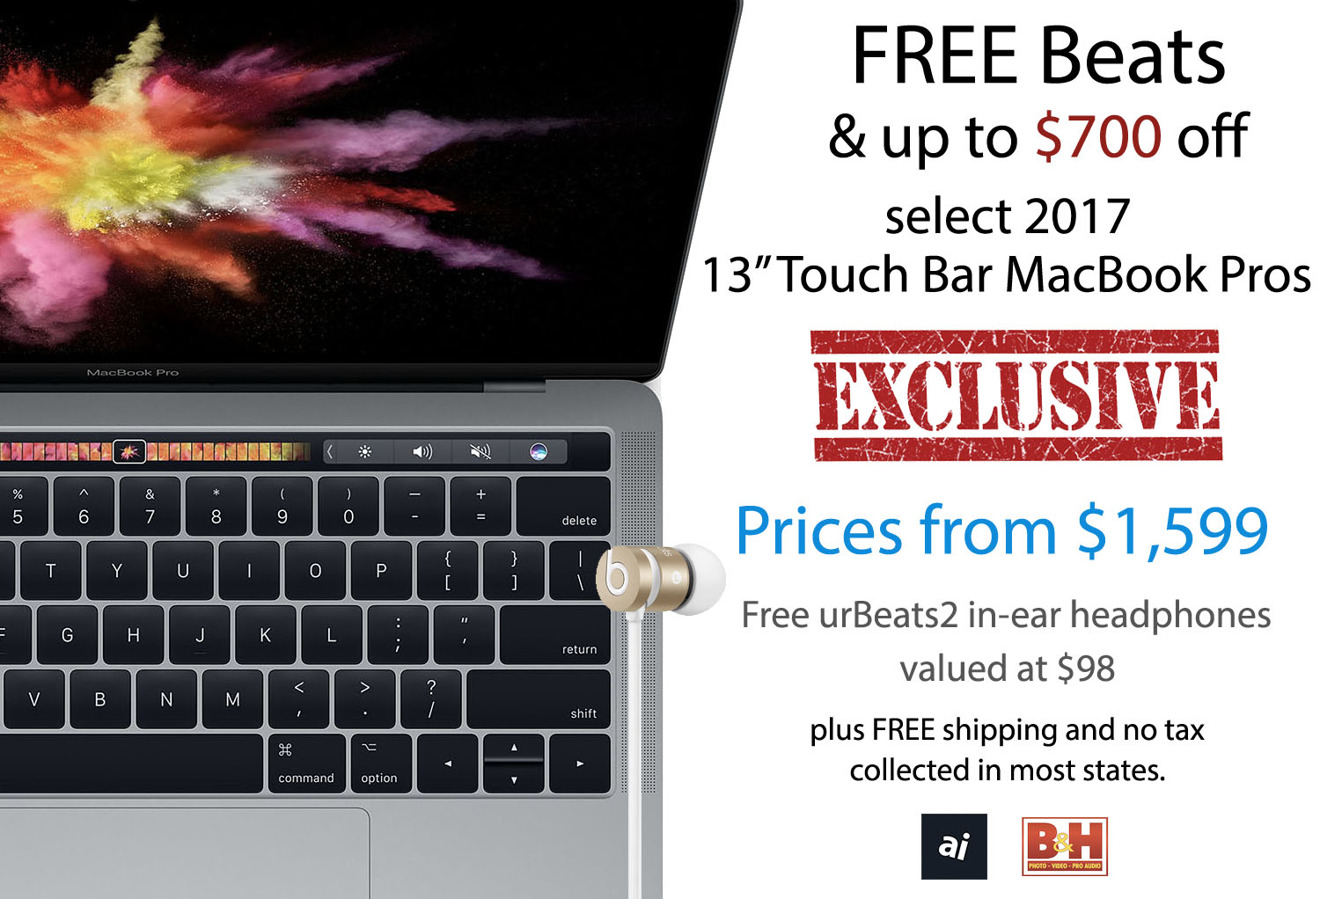 macbook pro and free beats